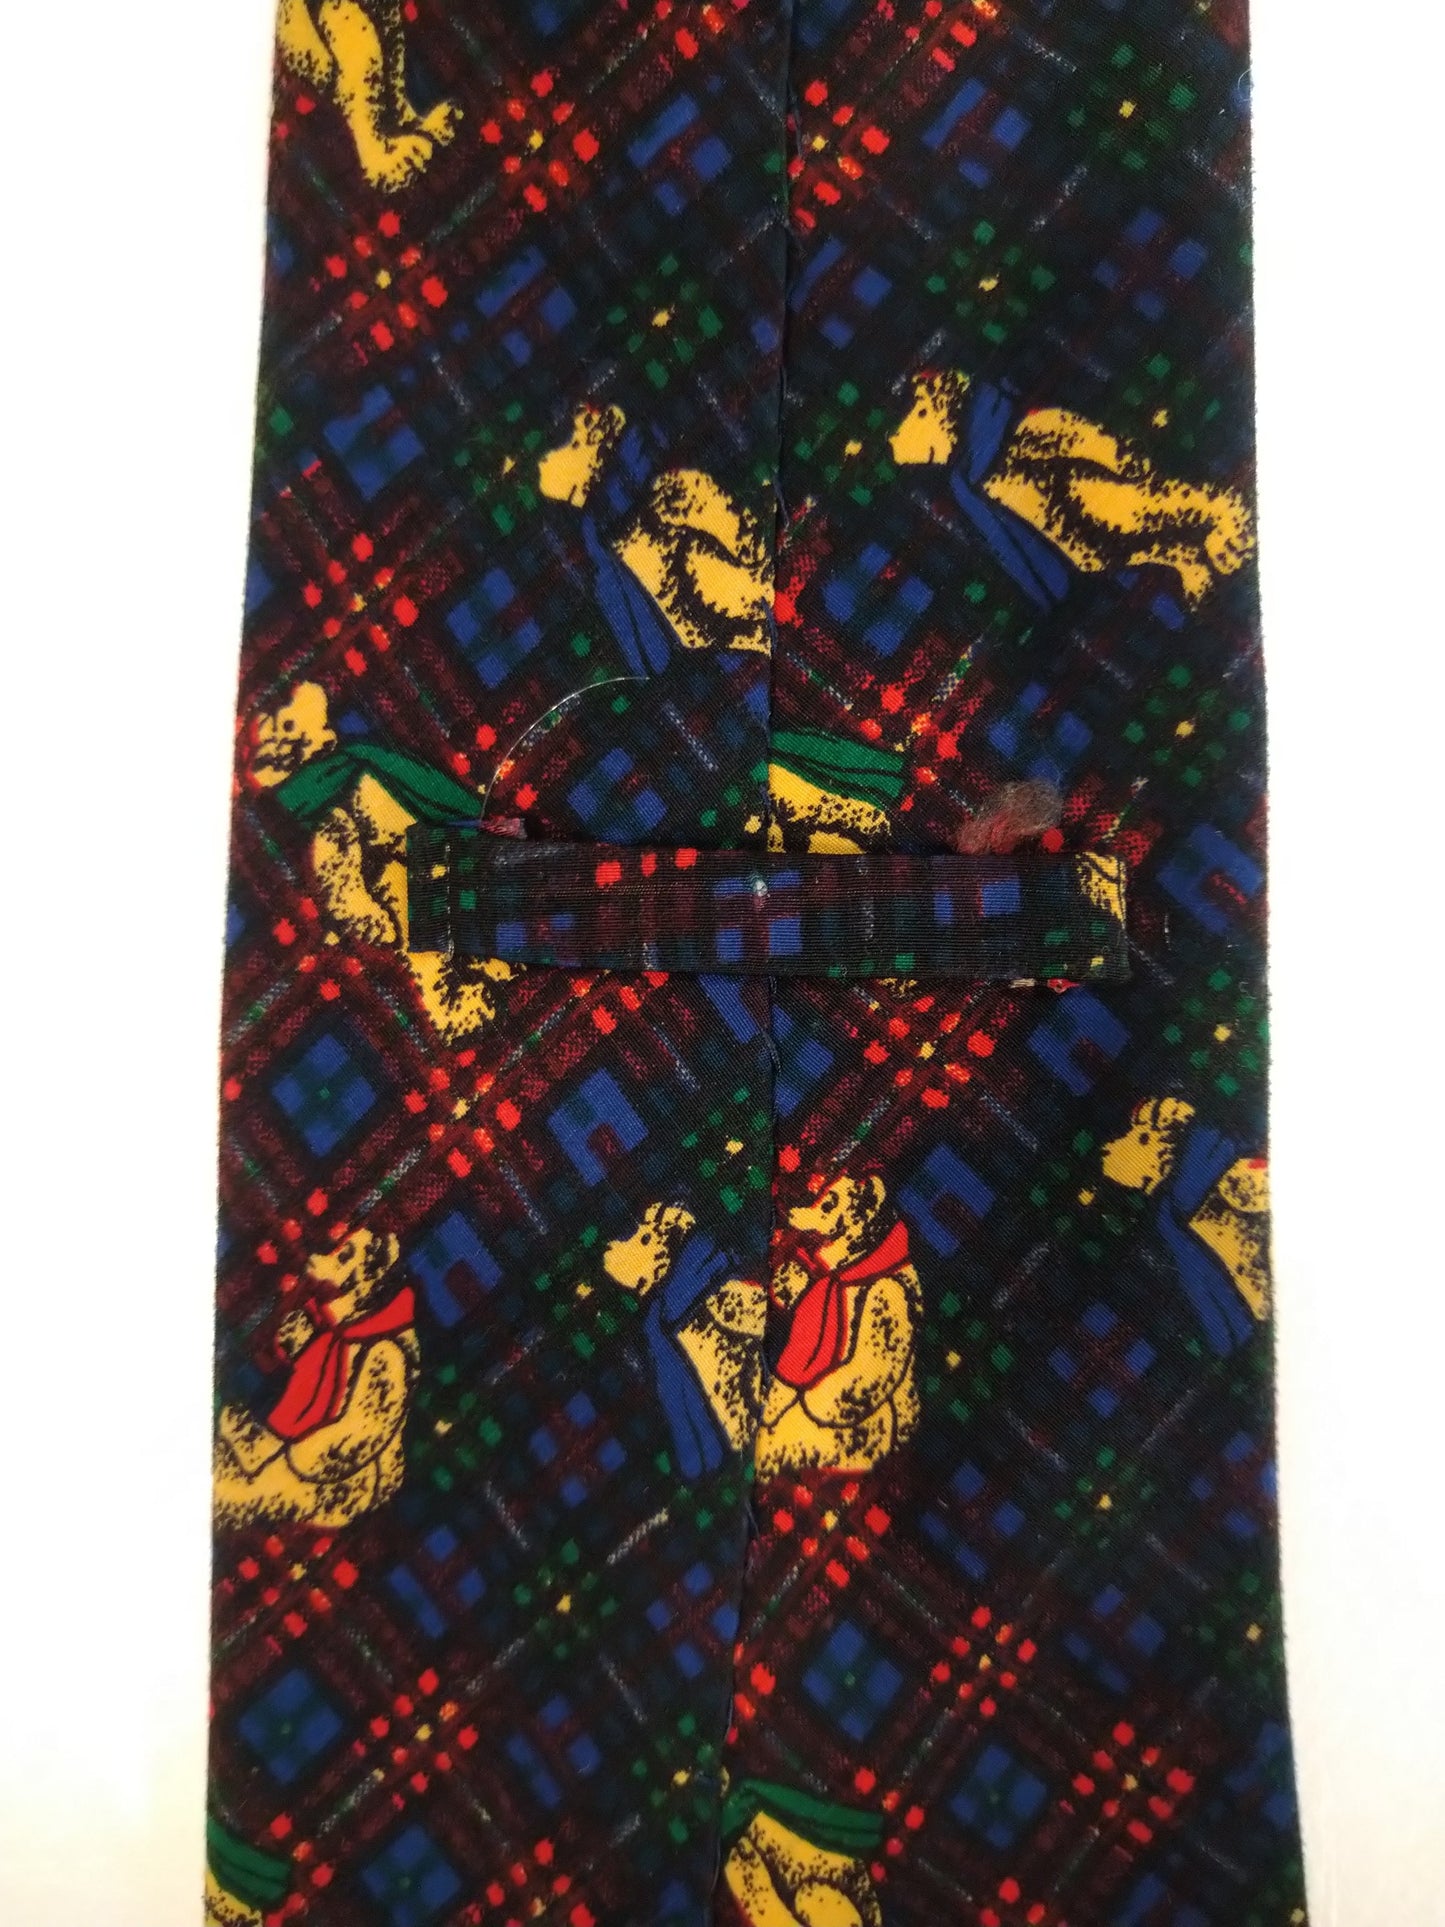 La corbata de poliéster vintage. Hermoso motivo de oso multicolor.